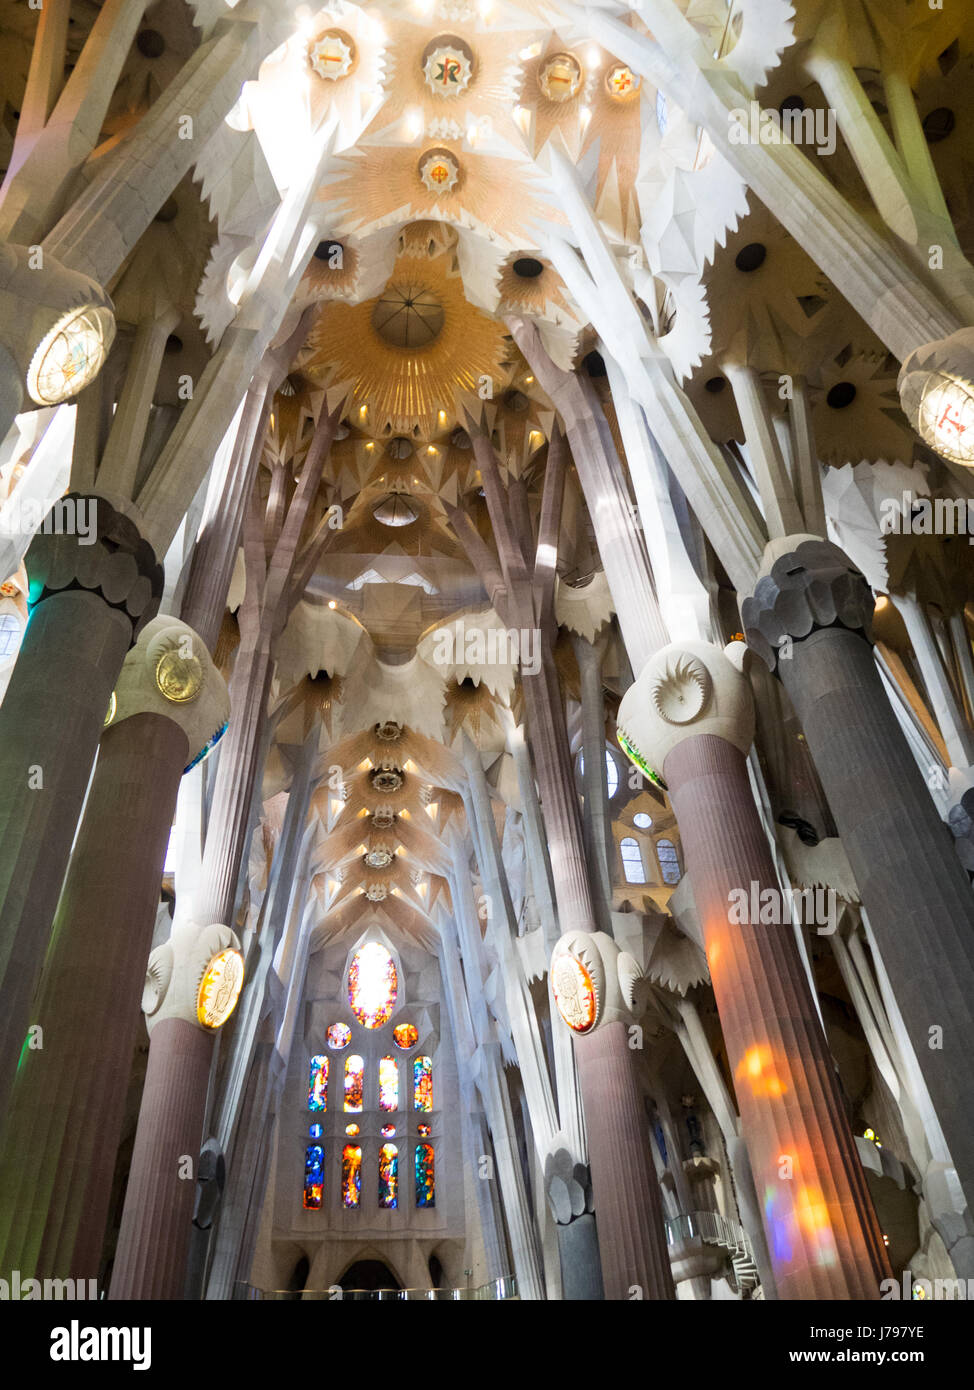 Decorative vaulted ceiling in Gaudi's Sagrada Familia Basilica in Barcelona  Spain Stock Photo - Alamy